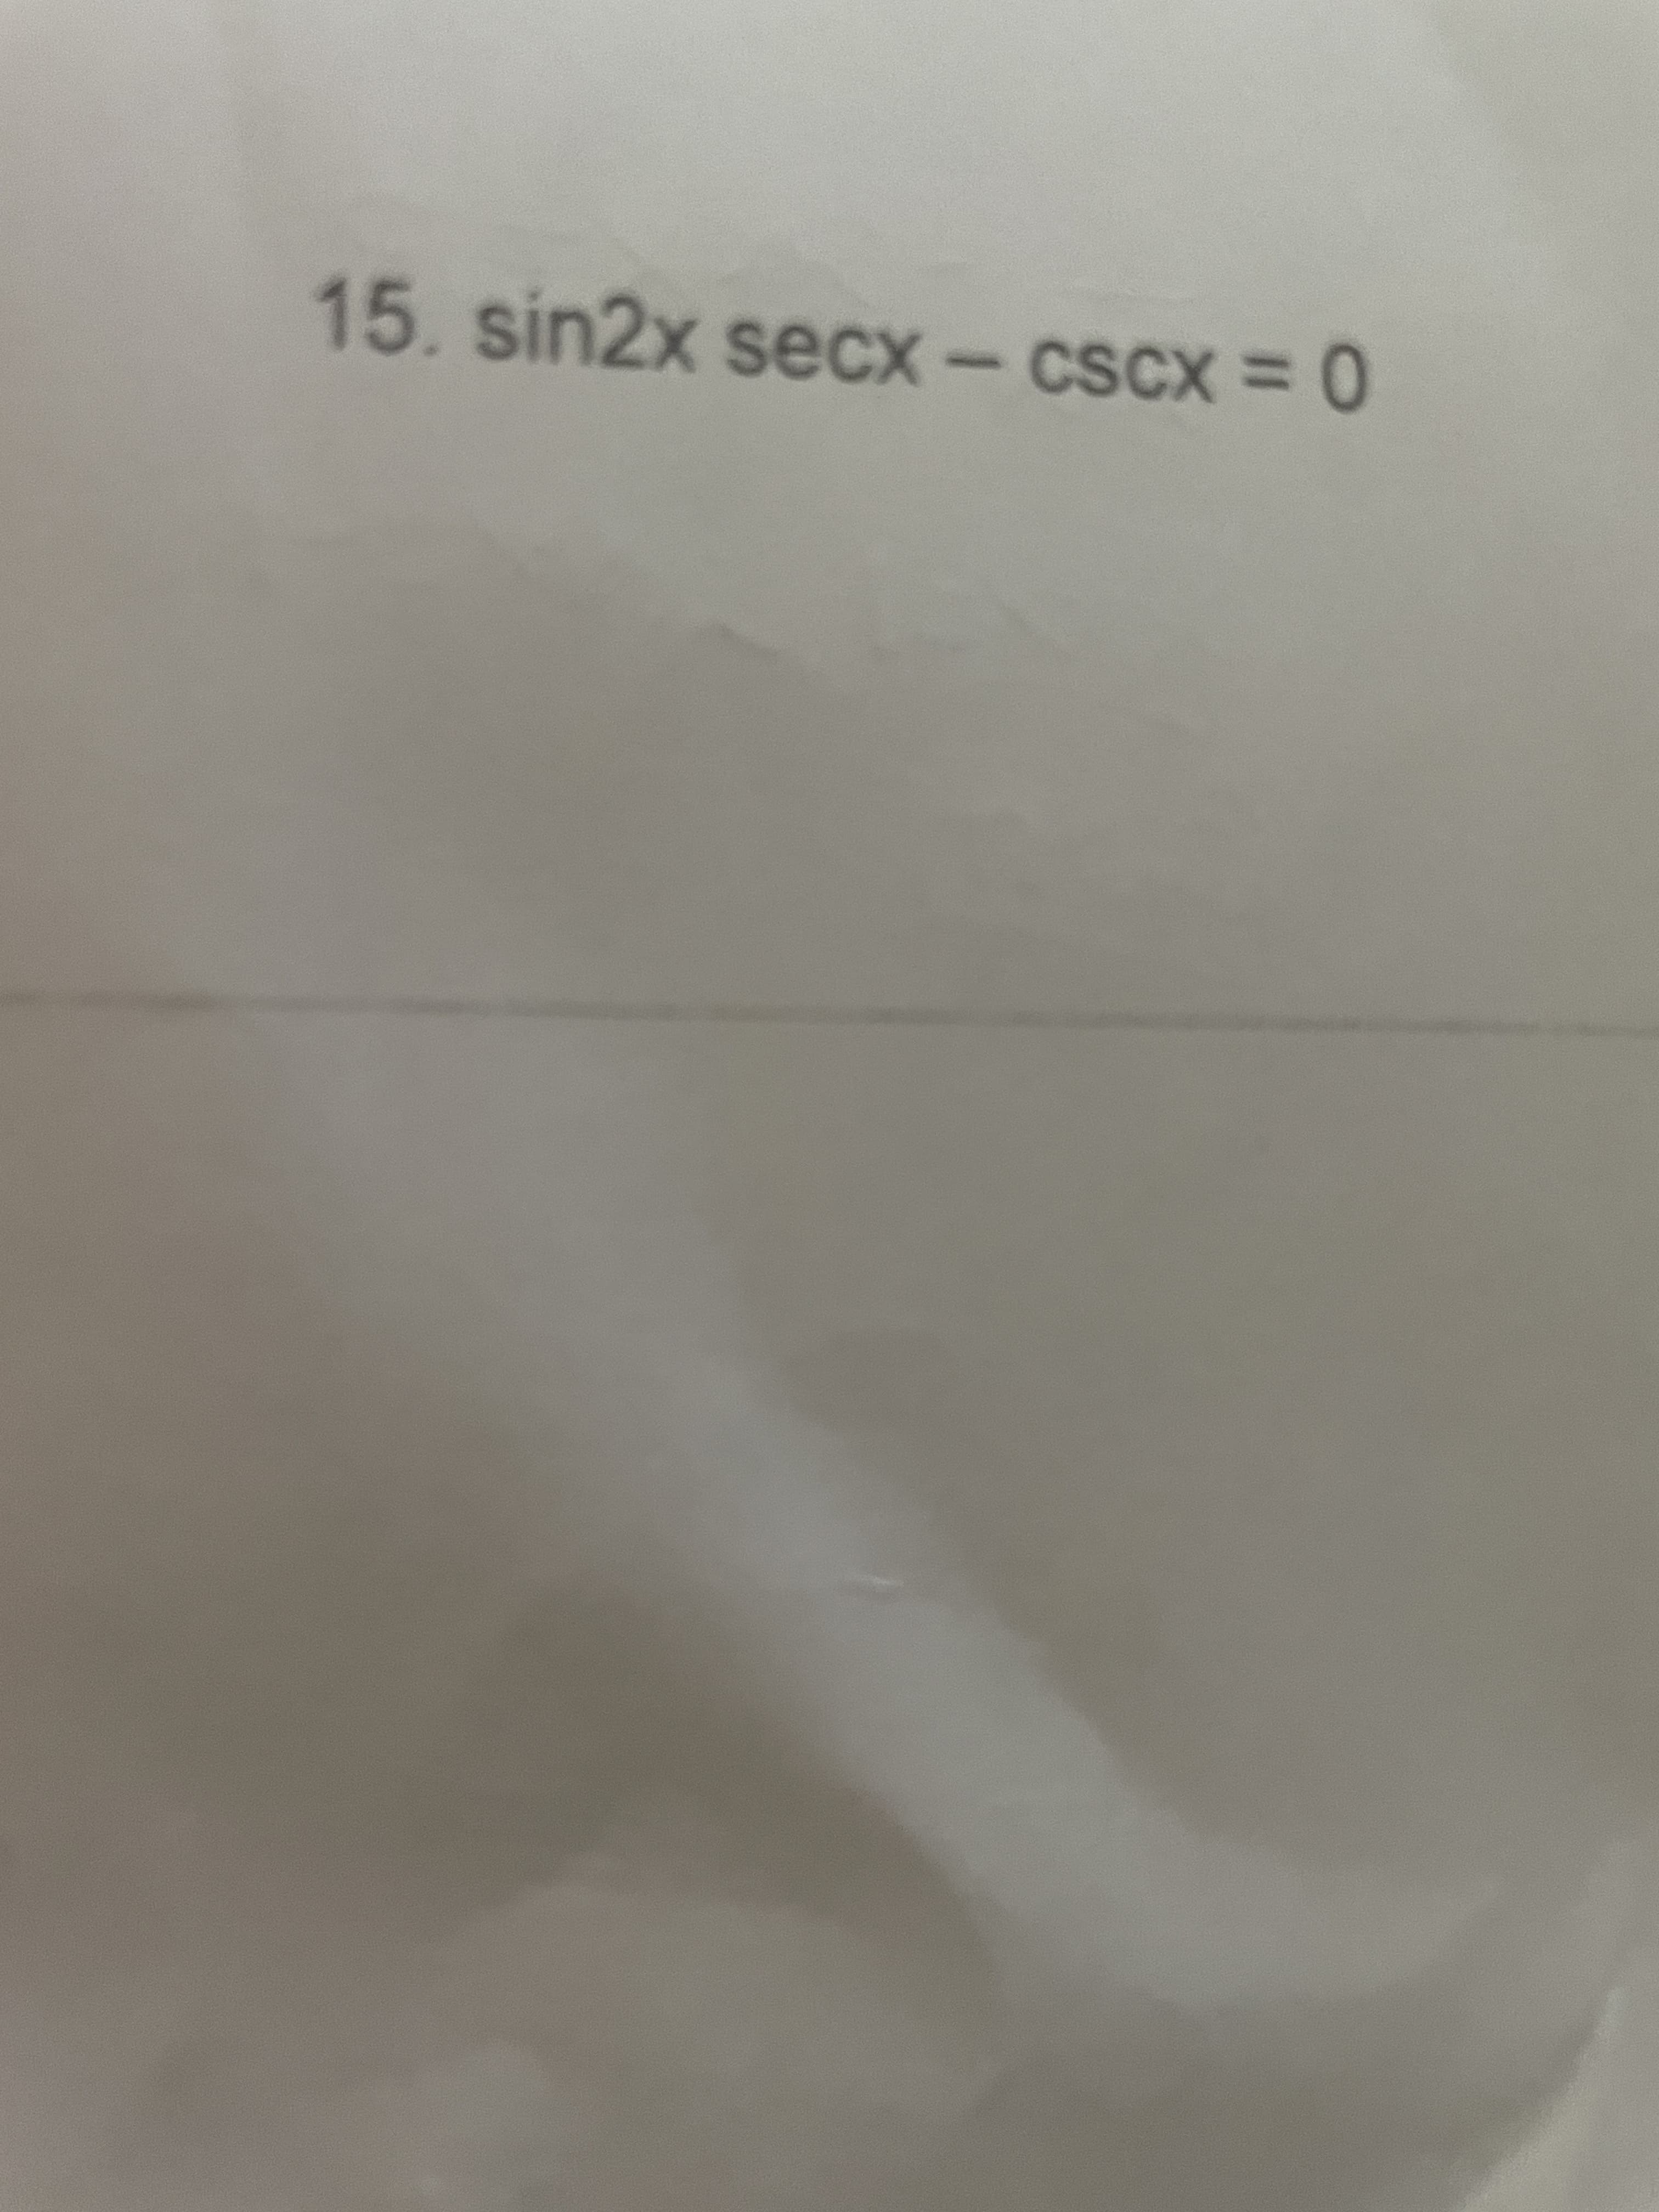 15.sin2x secx
cscx = 0
